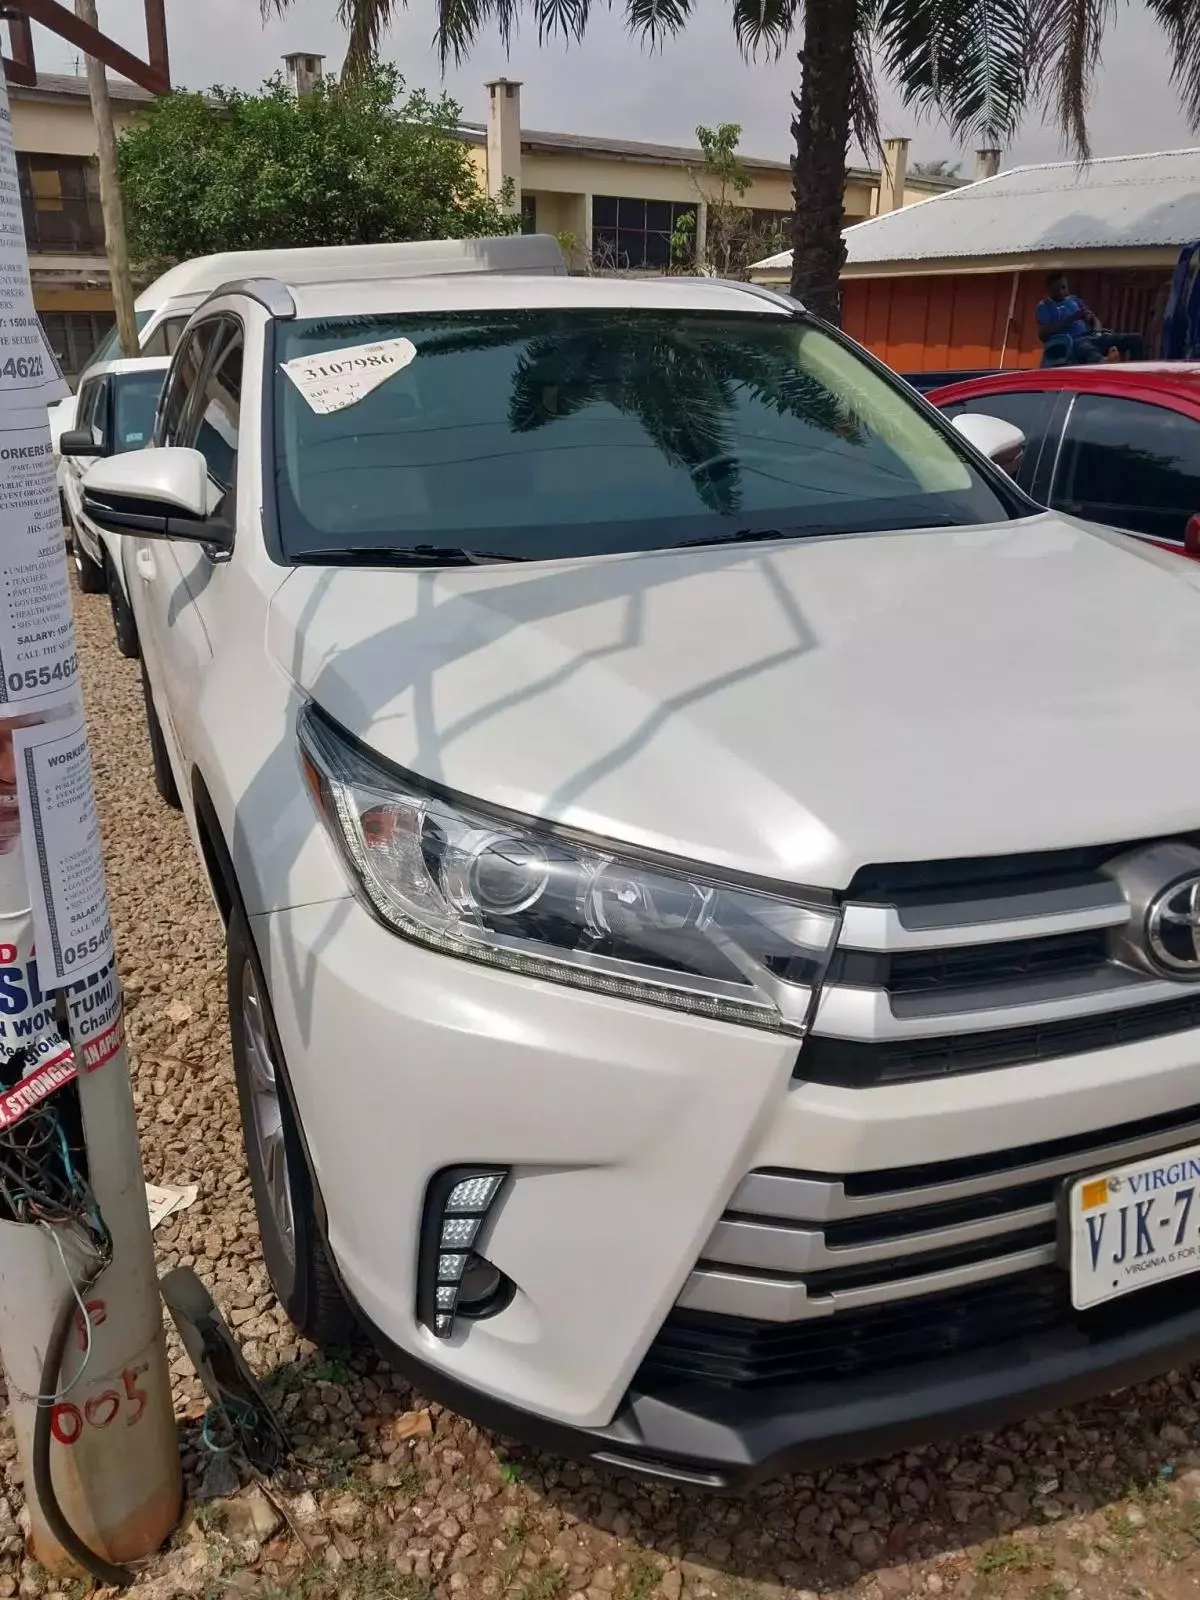 Toyota Highlander - 2016